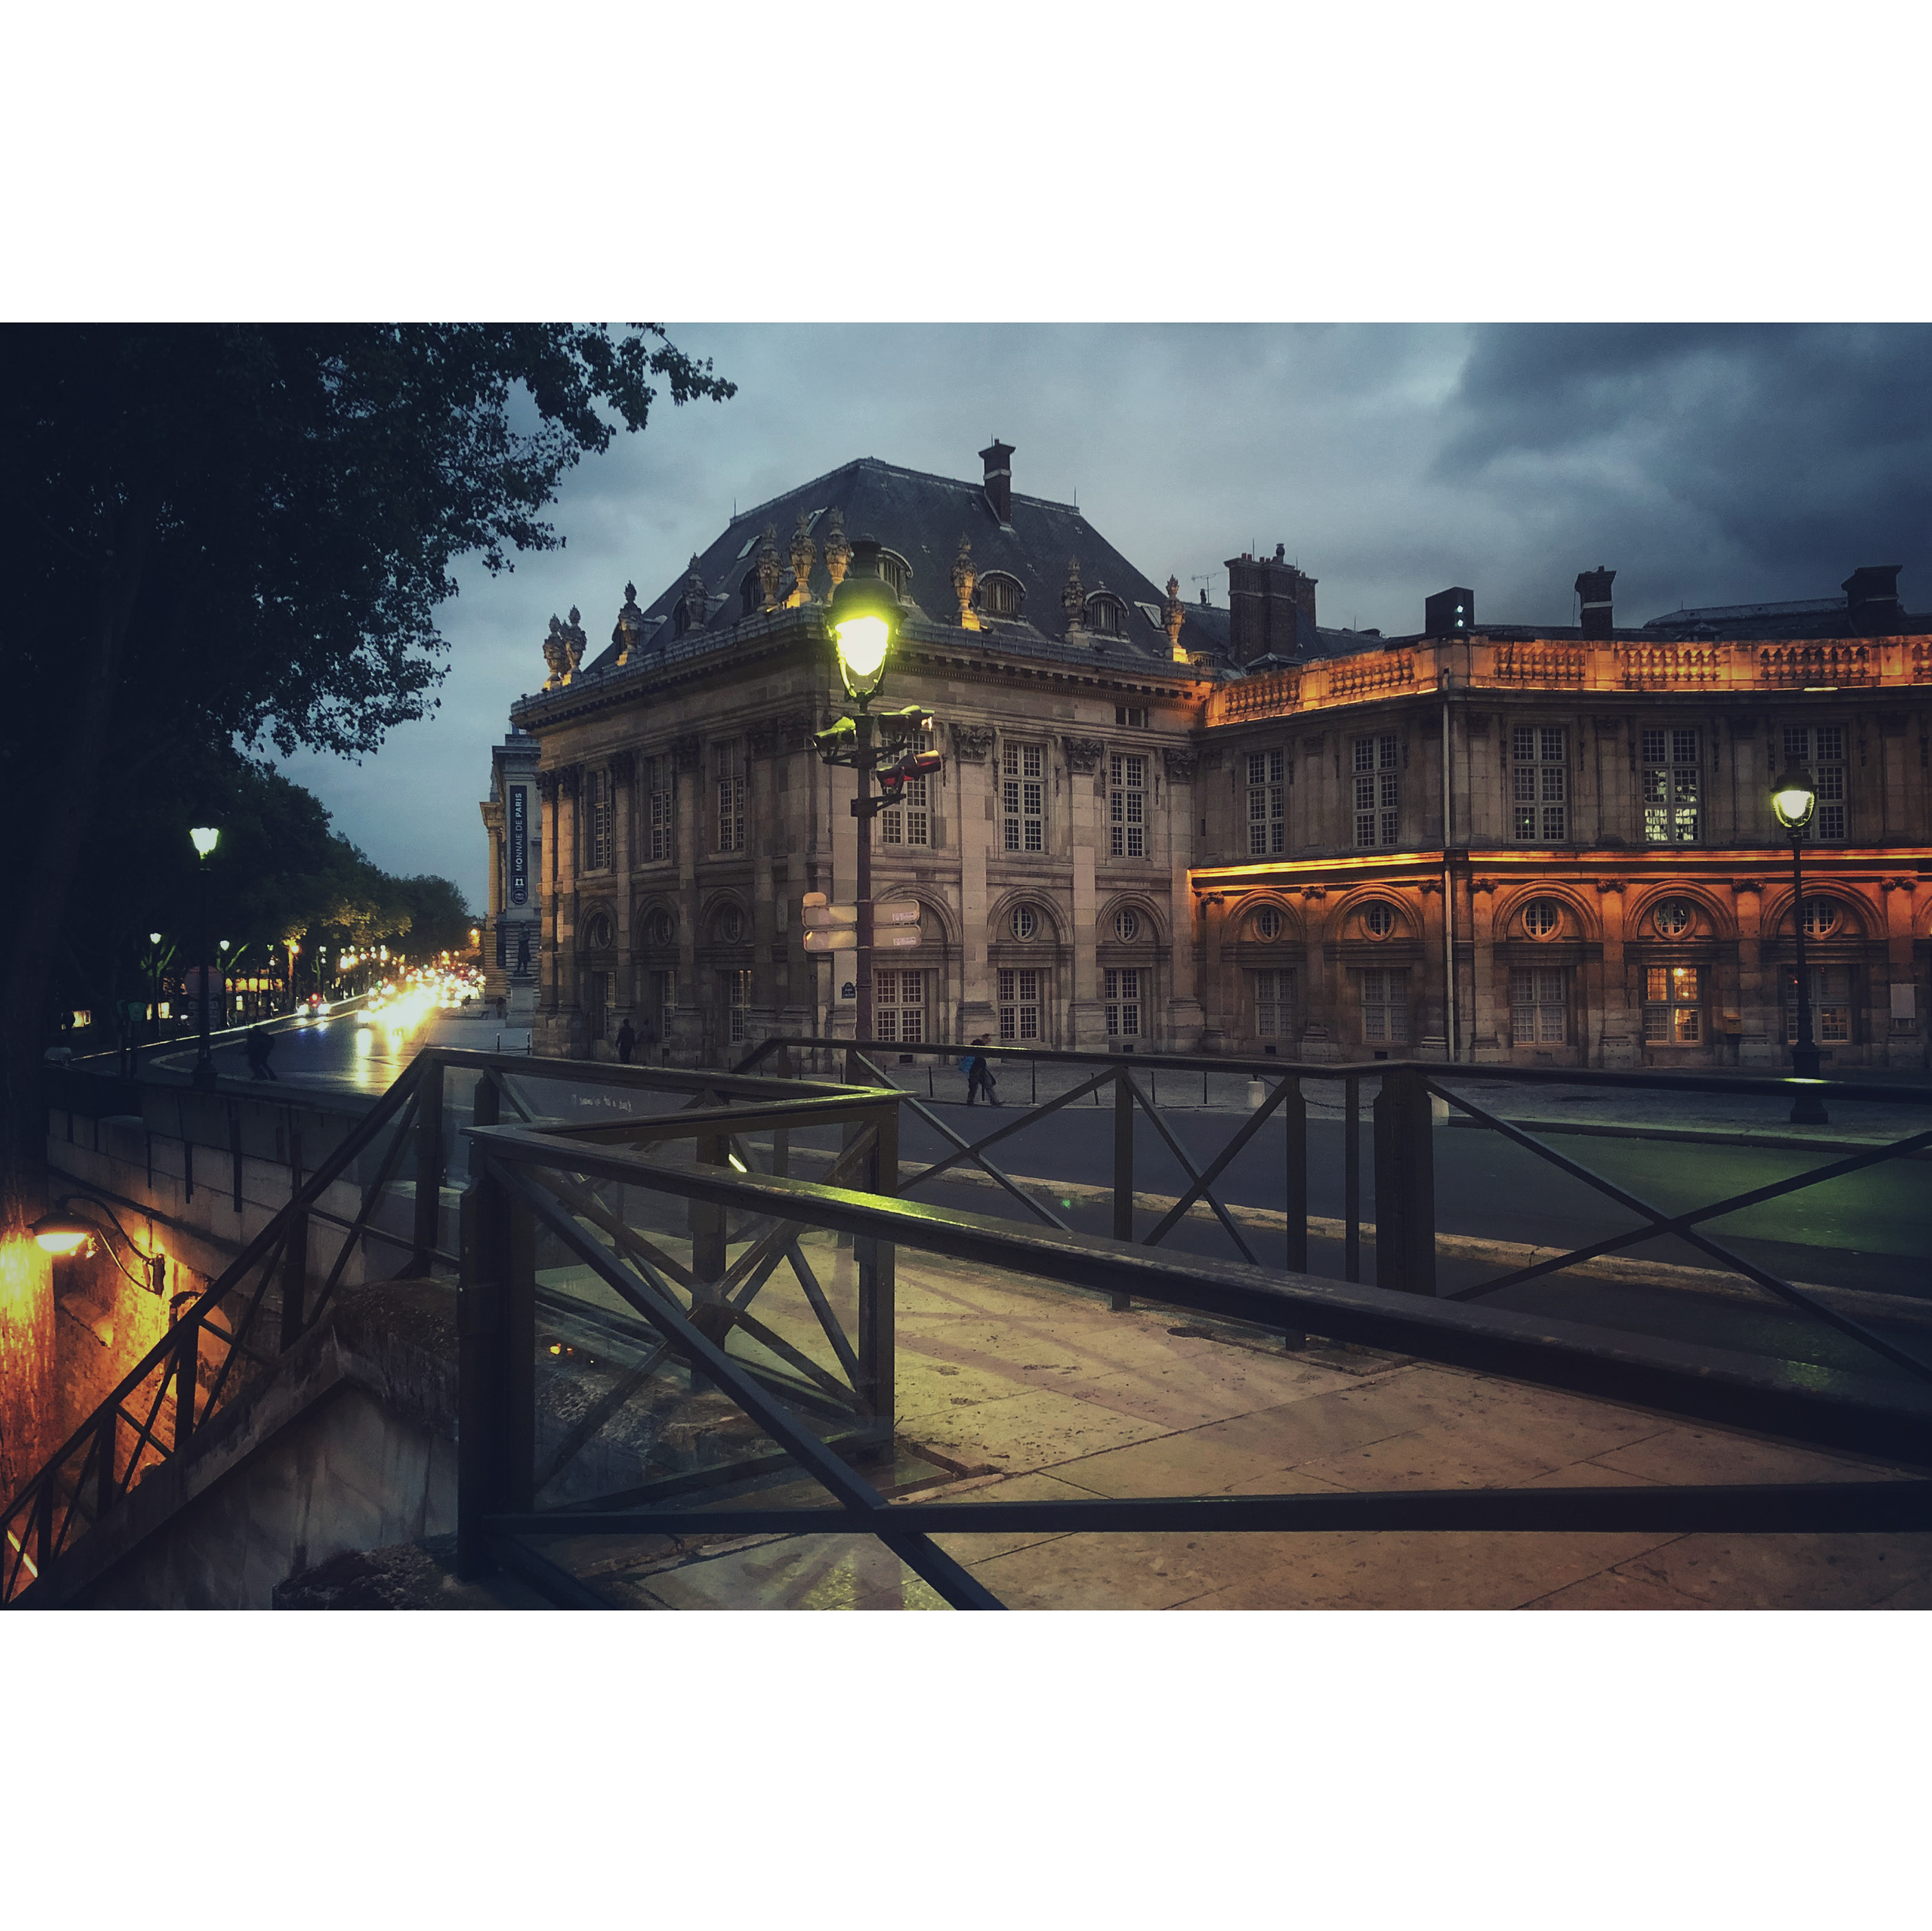 Paris by night - iPhone street.